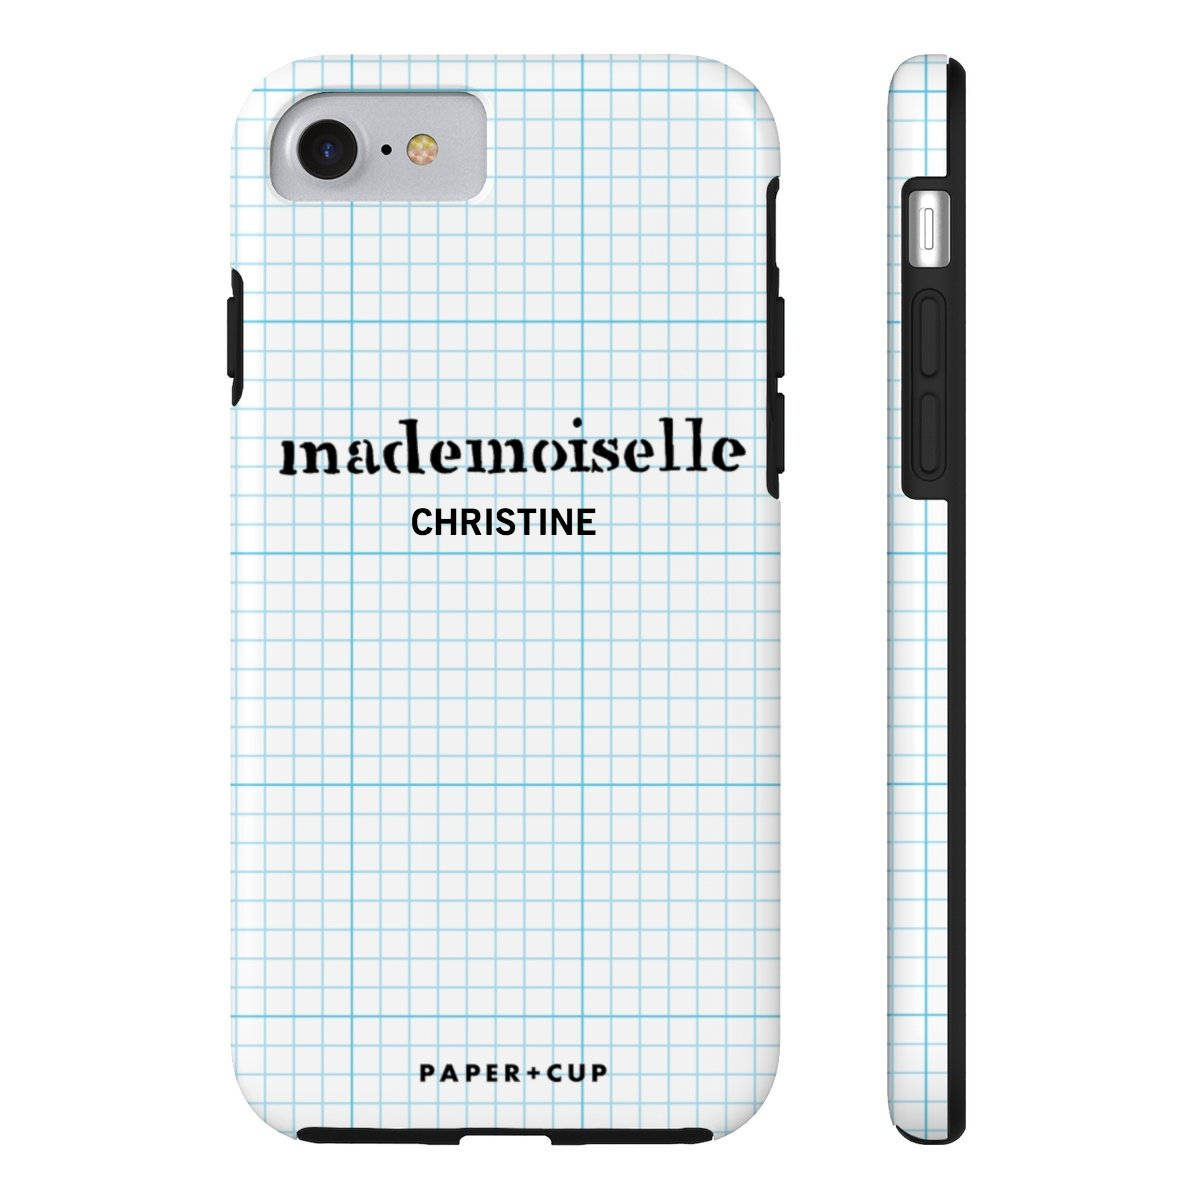 mademoisellephone-mockup.png